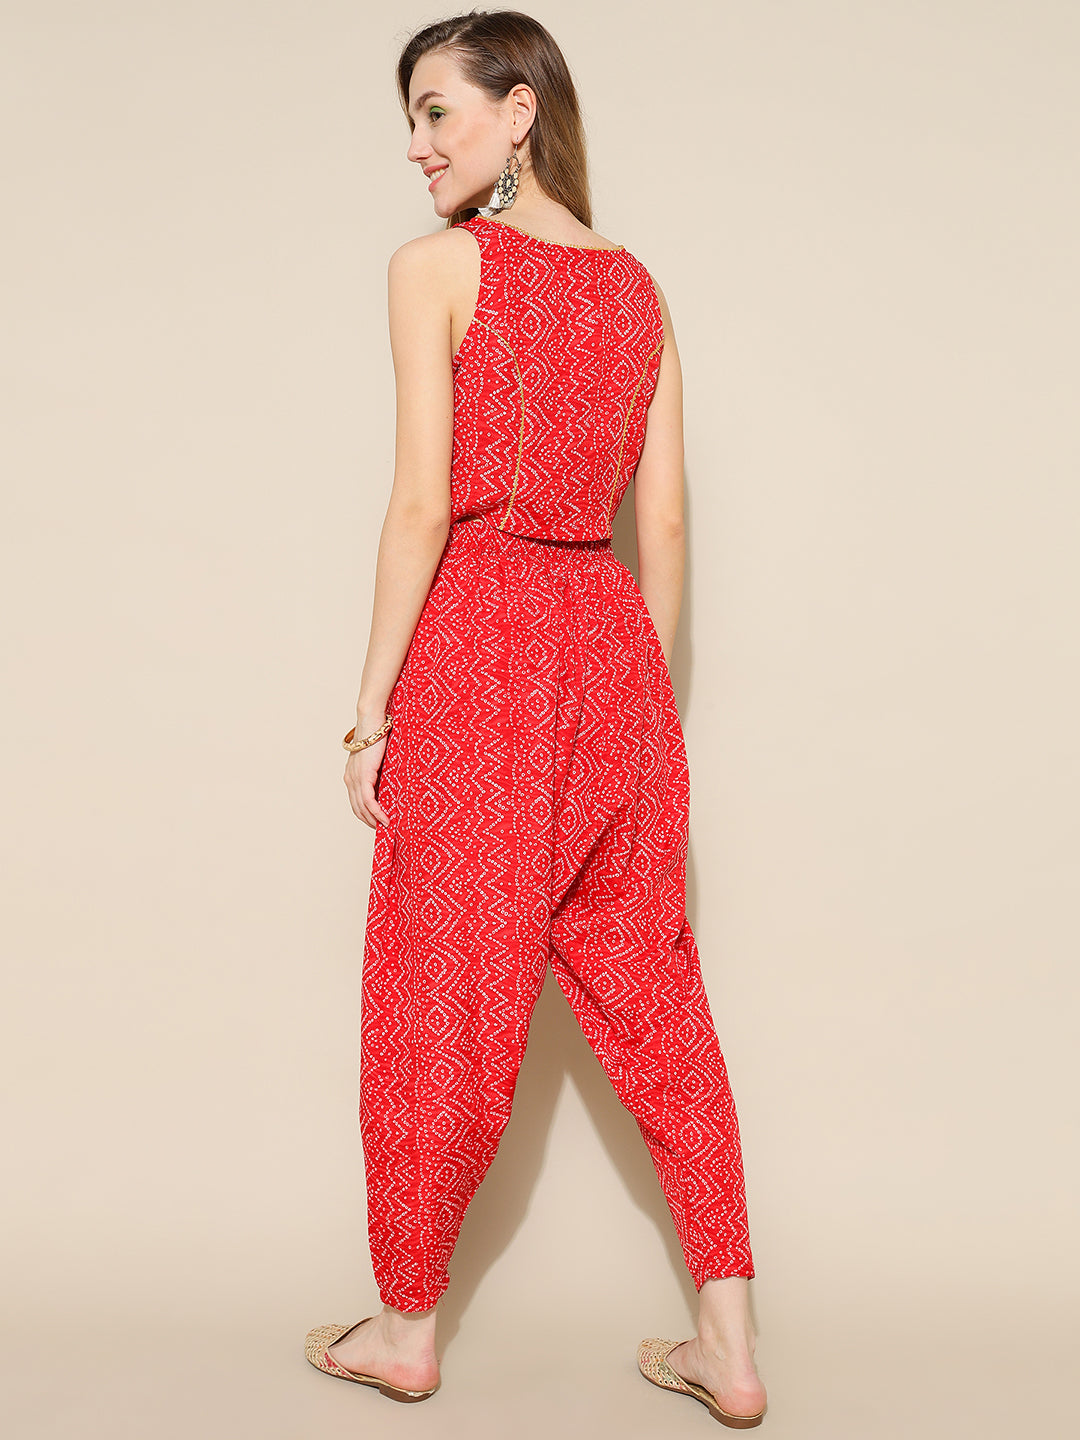 ANUSHIL Elegant Chundri Co-ord Set for Women - Perfect Ethnic Ensemble - Trendy Two-Piece Outfits(Red)